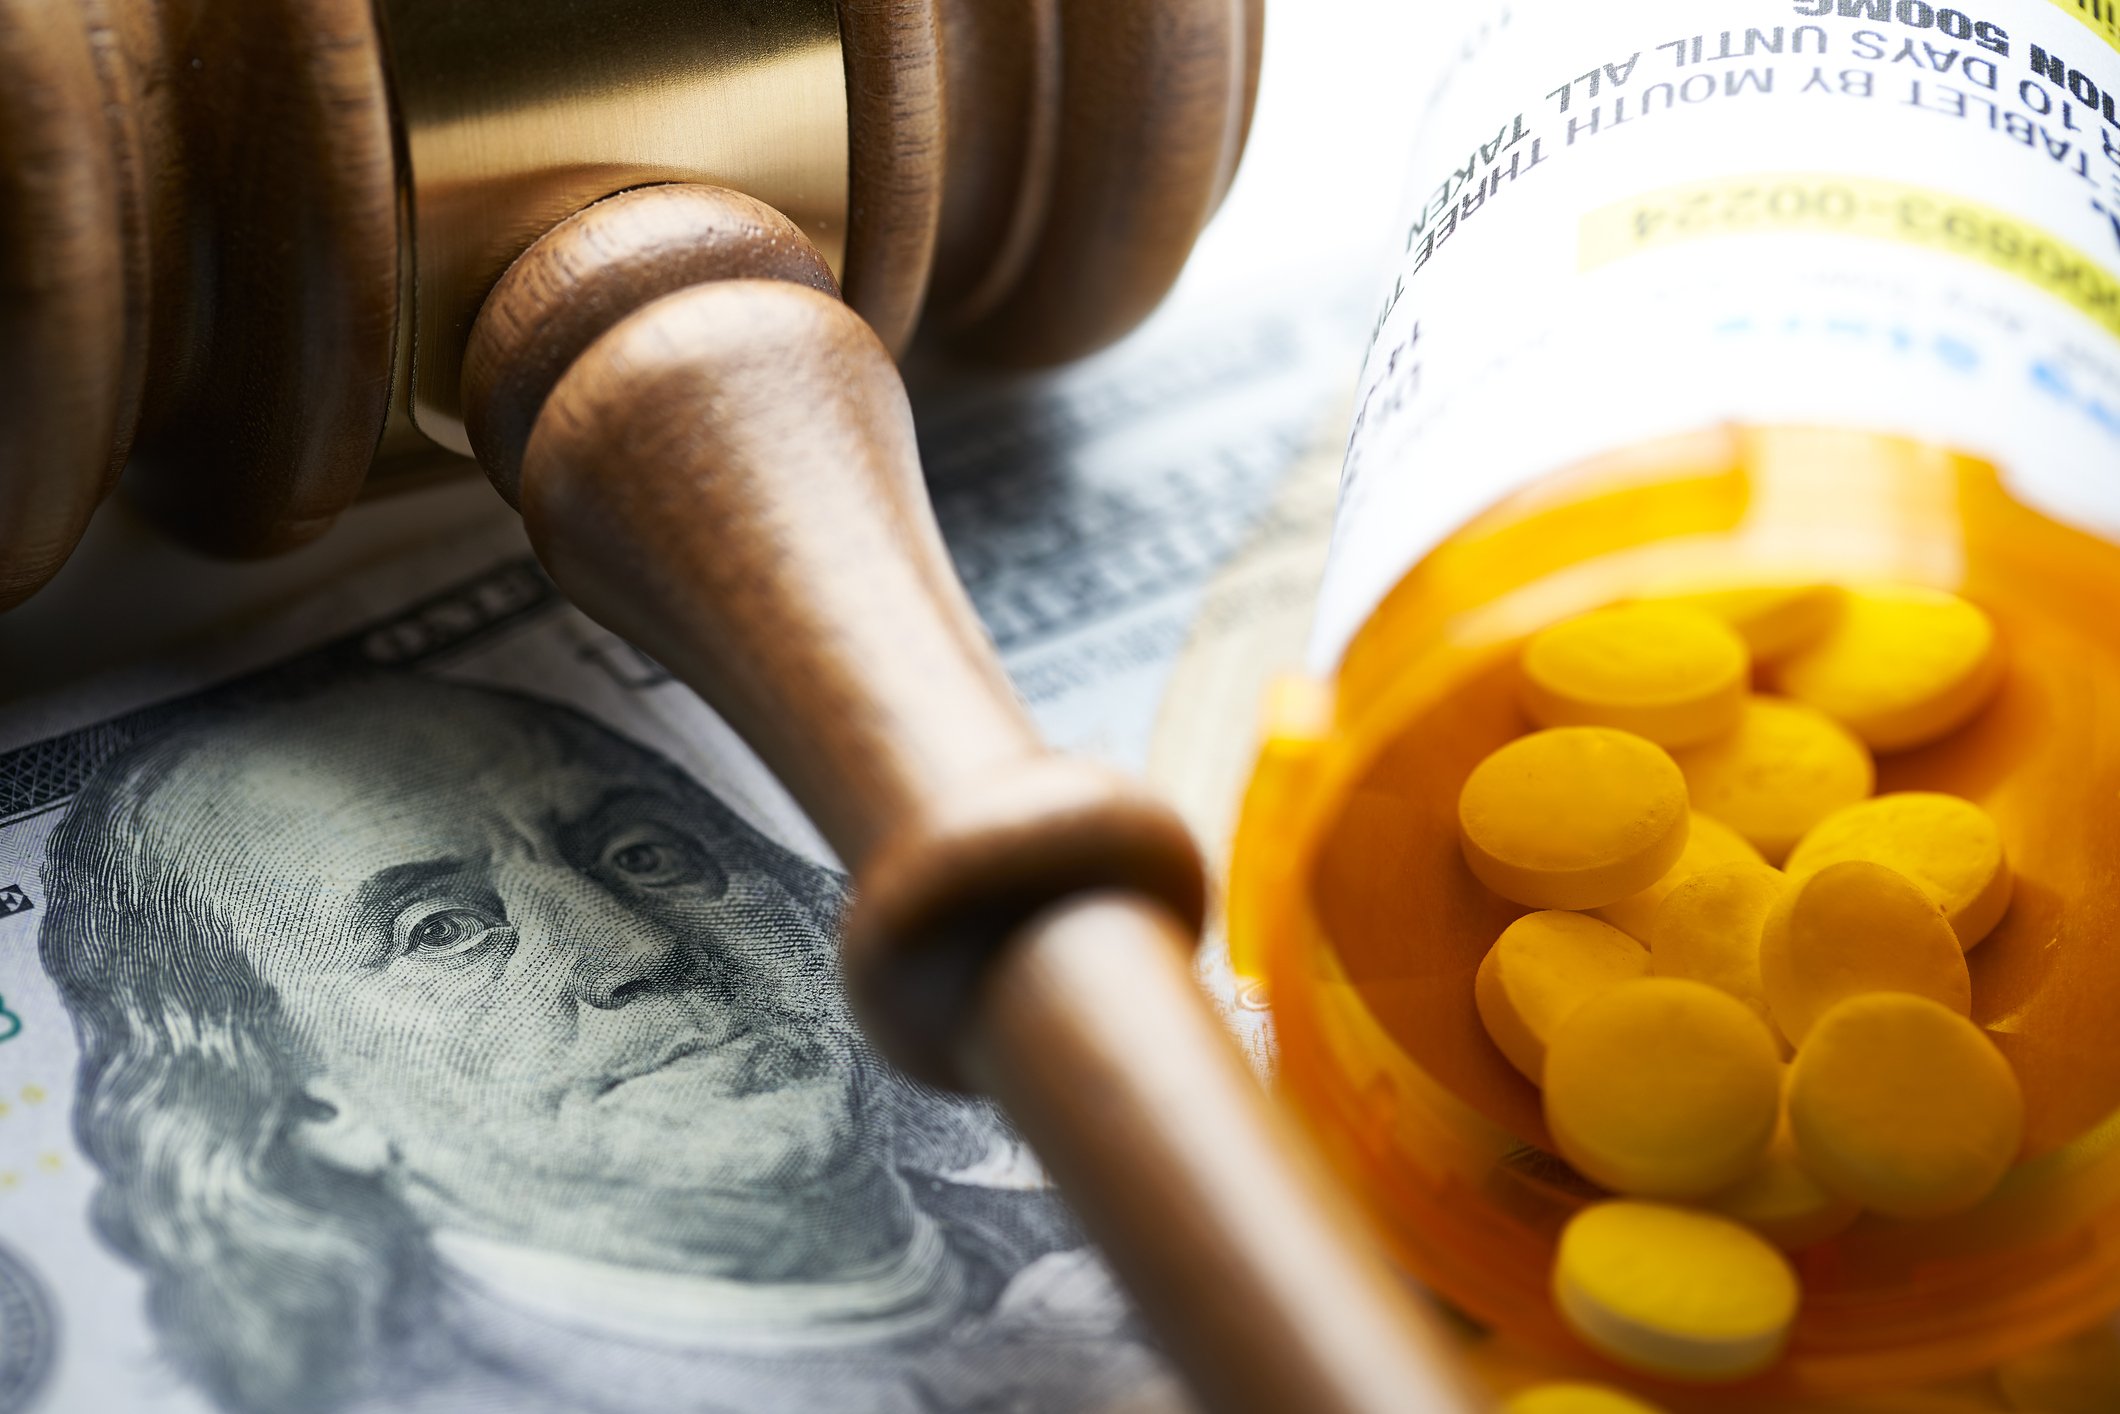 Medicare price negotiation preliminary injunction